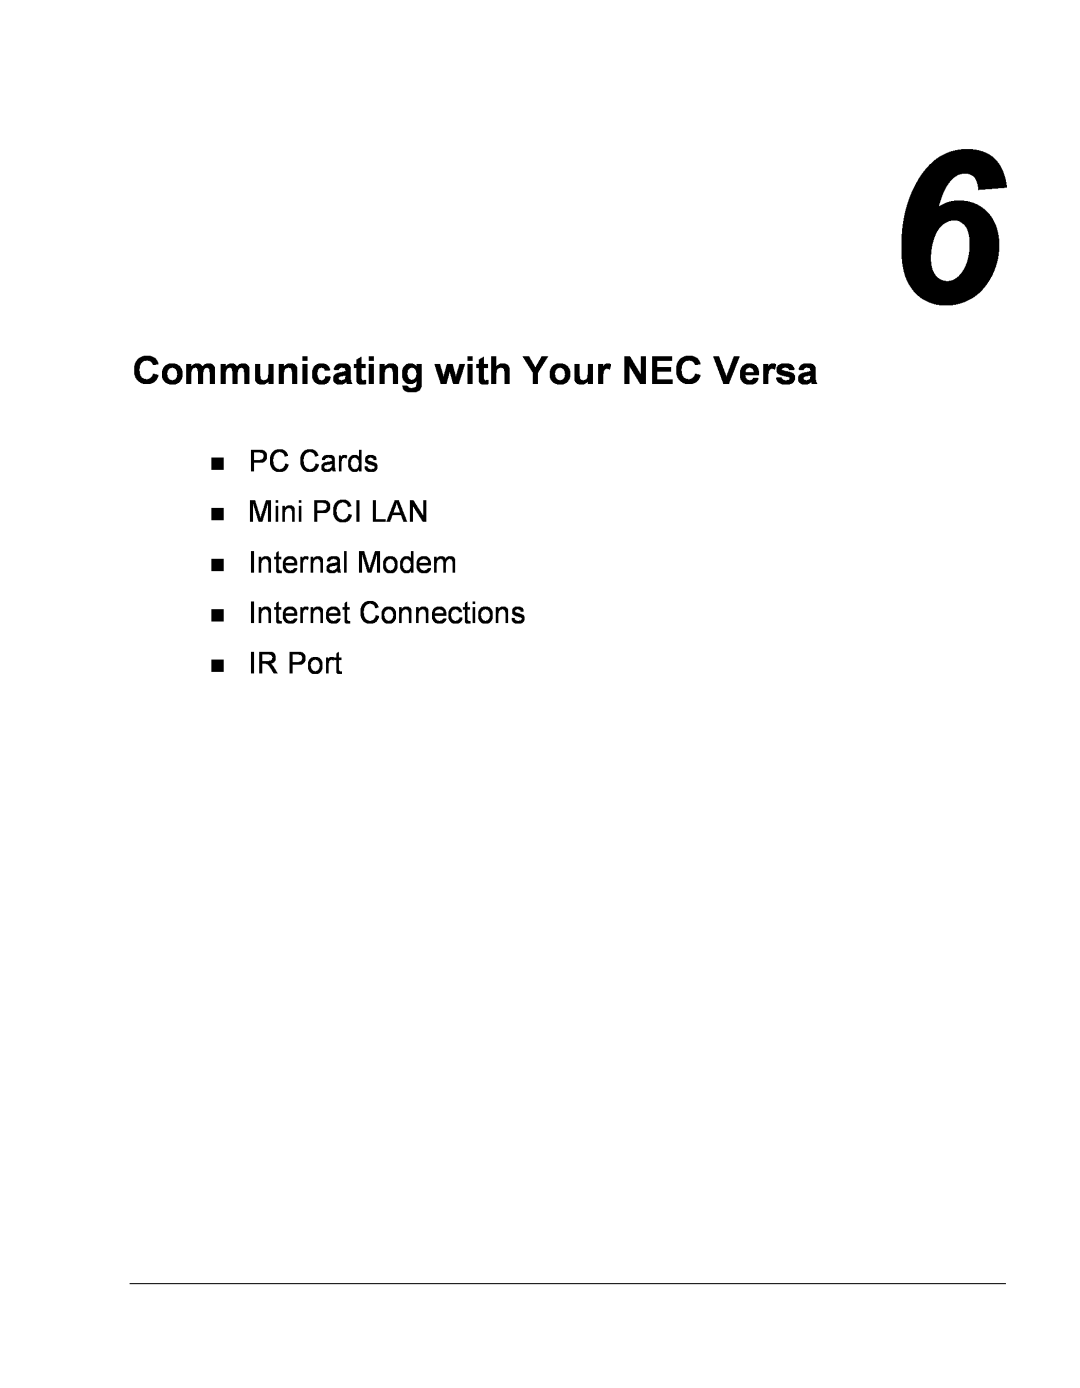 NEC Versa Series Communicating with Your NEC Versa, PC Cards Mini PCI LAN Internal Modem Internet Connections IR Port 